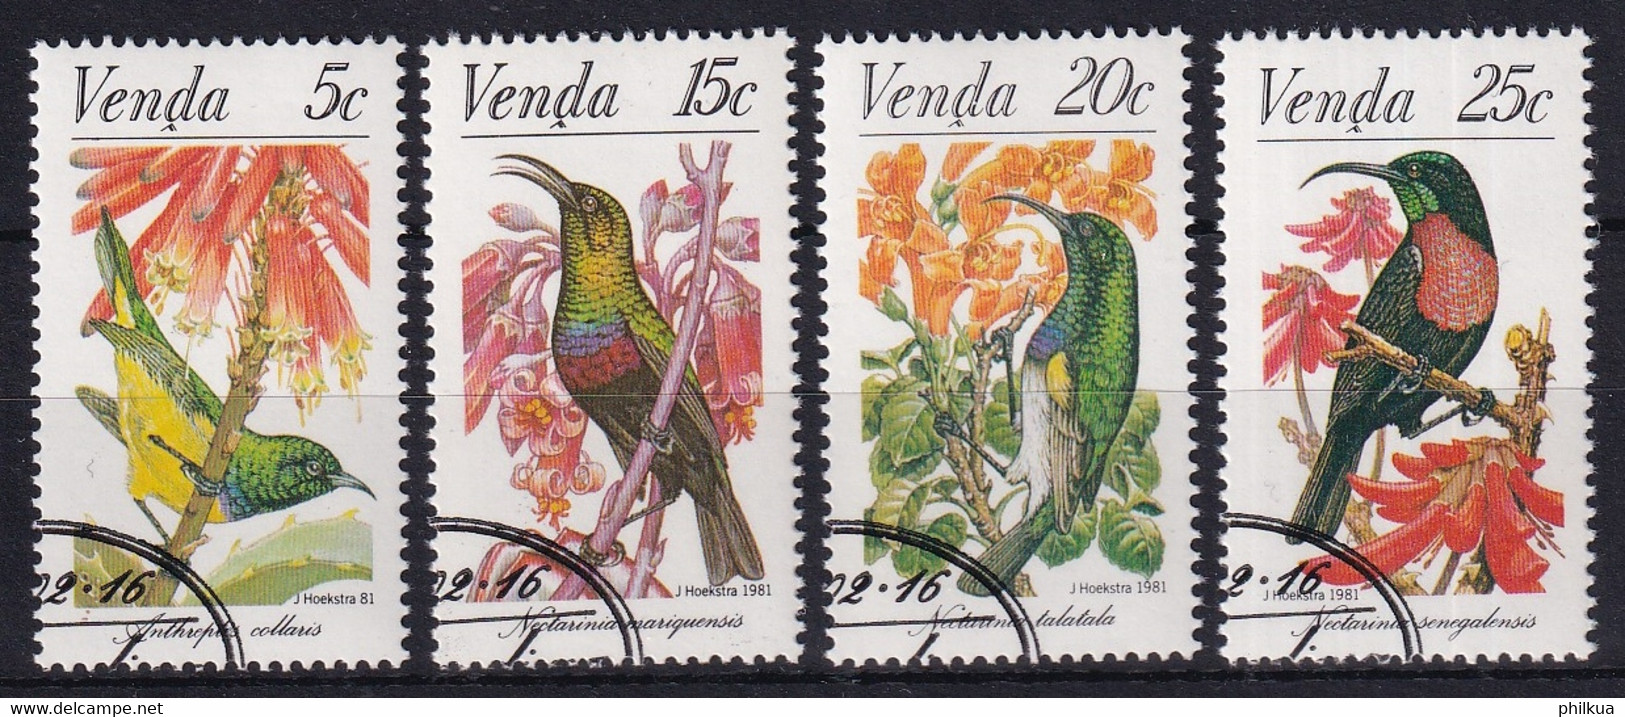 MiNr. 38 - 41 Südafrika, Venda 1981, 16. Febr. Nektarvögel - Sauber Gestempelt - Venda